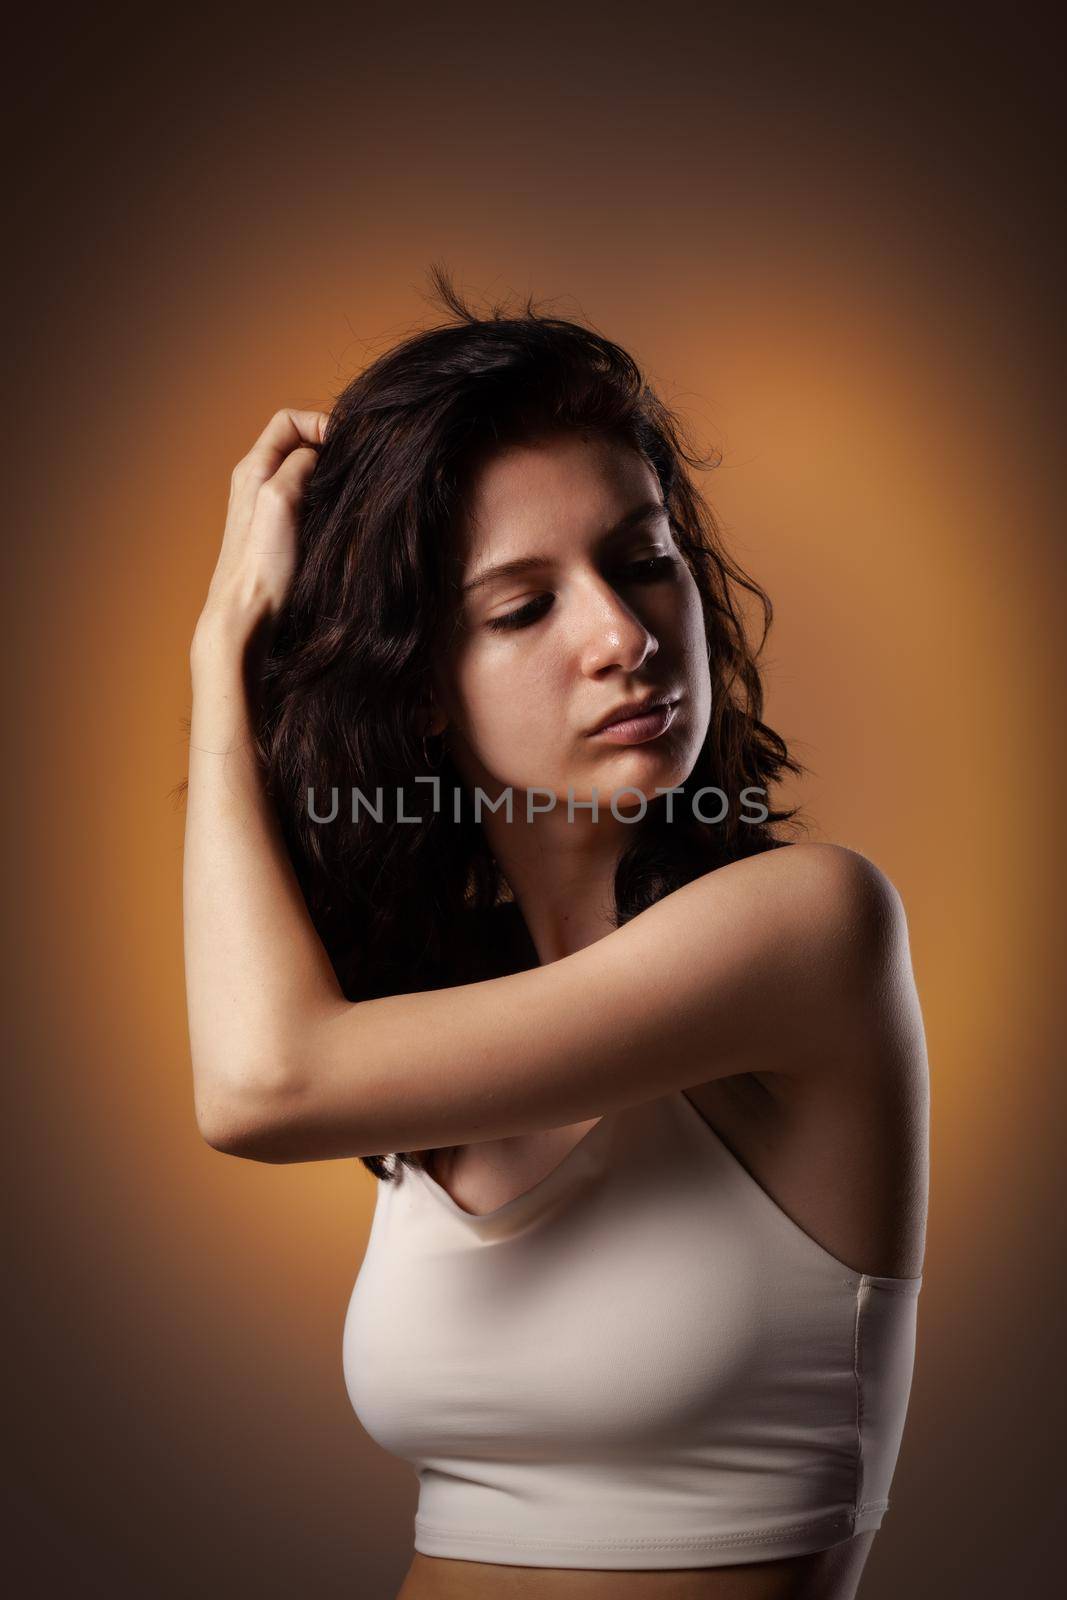 Beautiful teenage girl studio portrait on neon orange colored background.